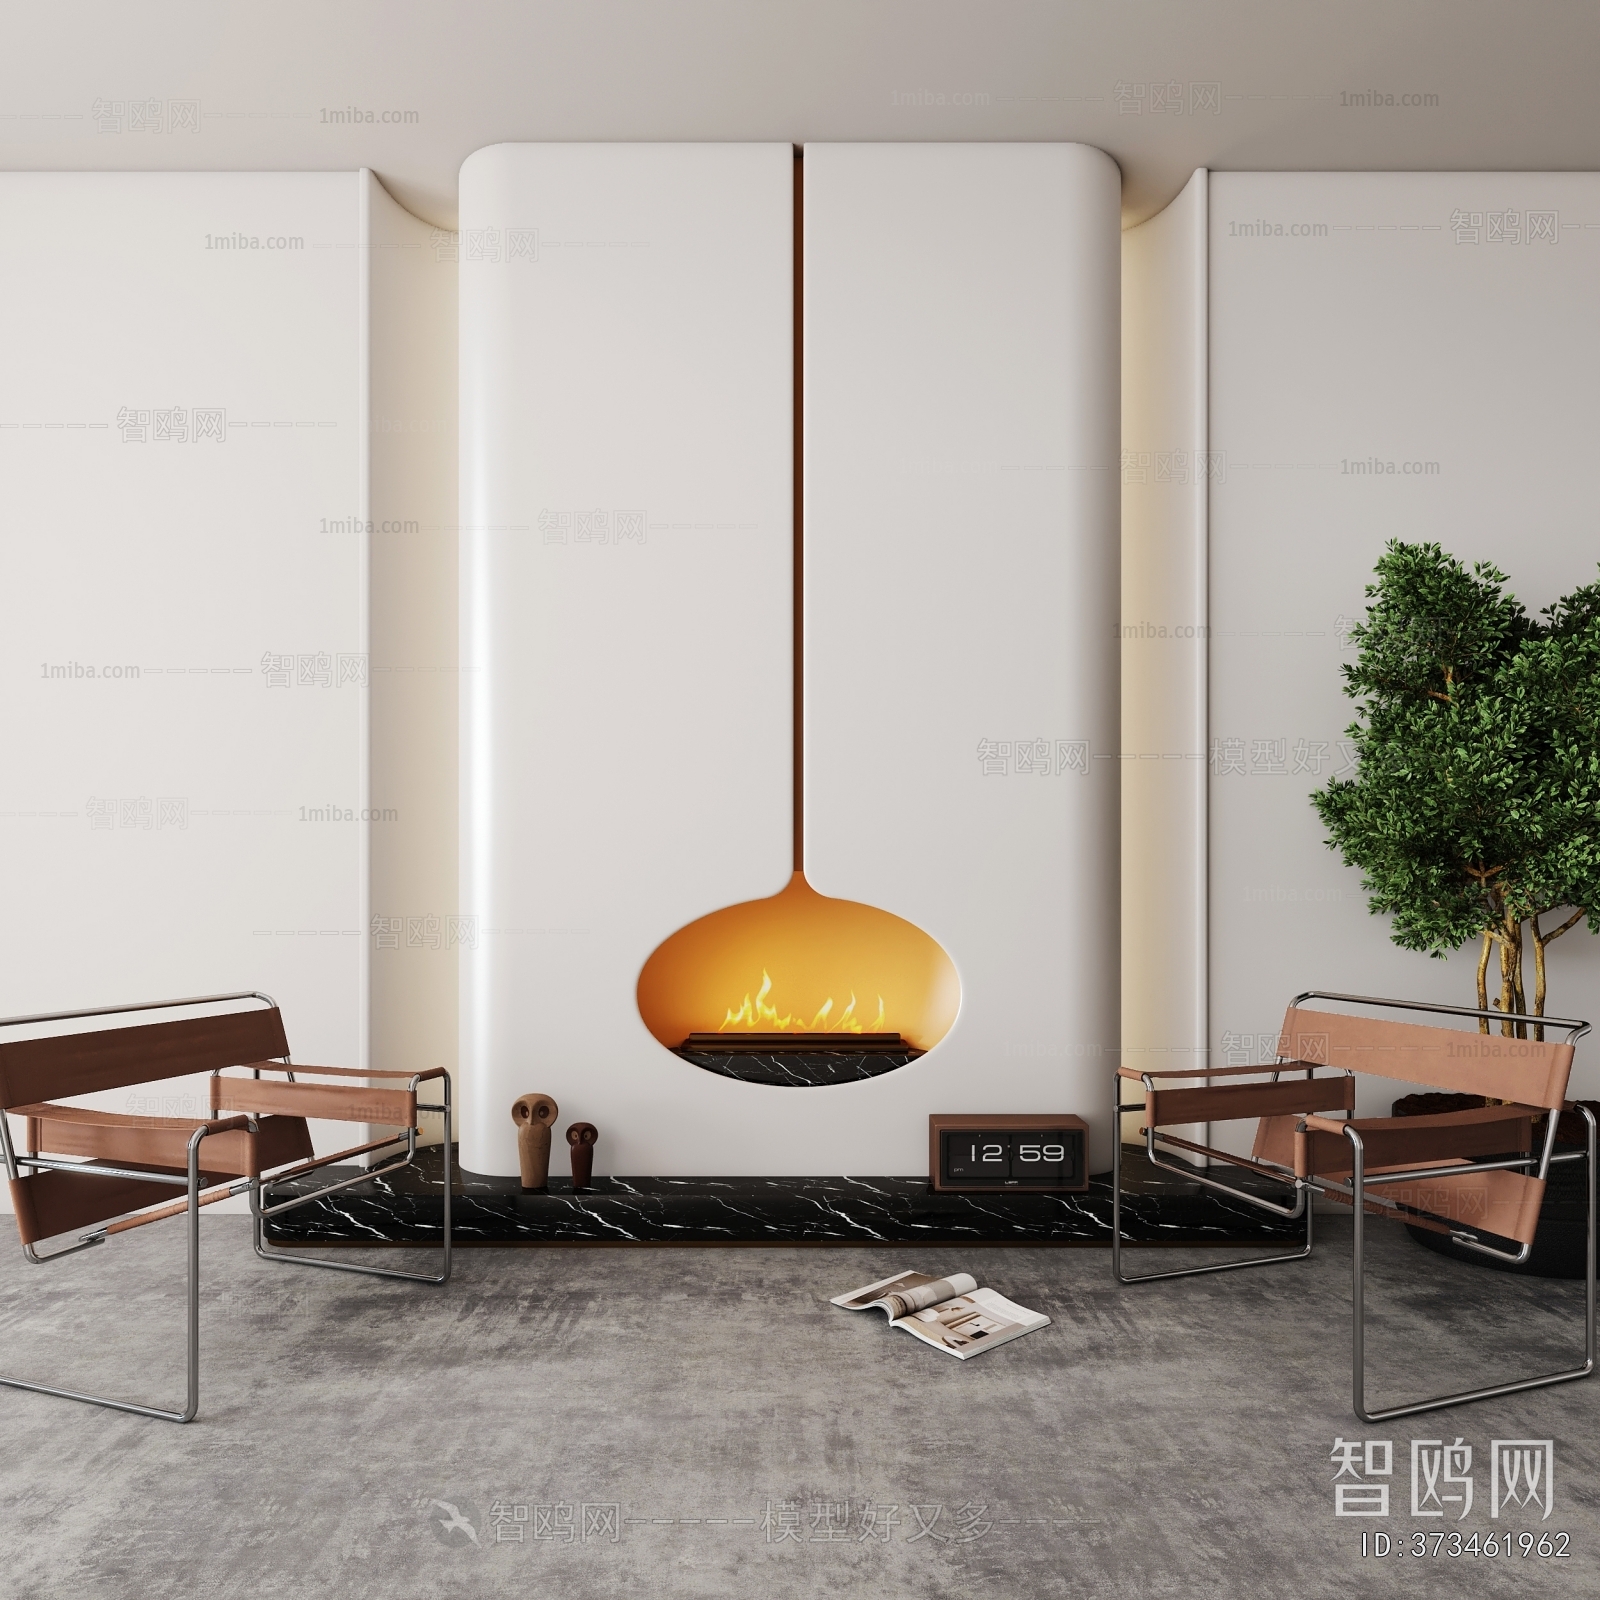 Wabi-sabi Style Fireplace